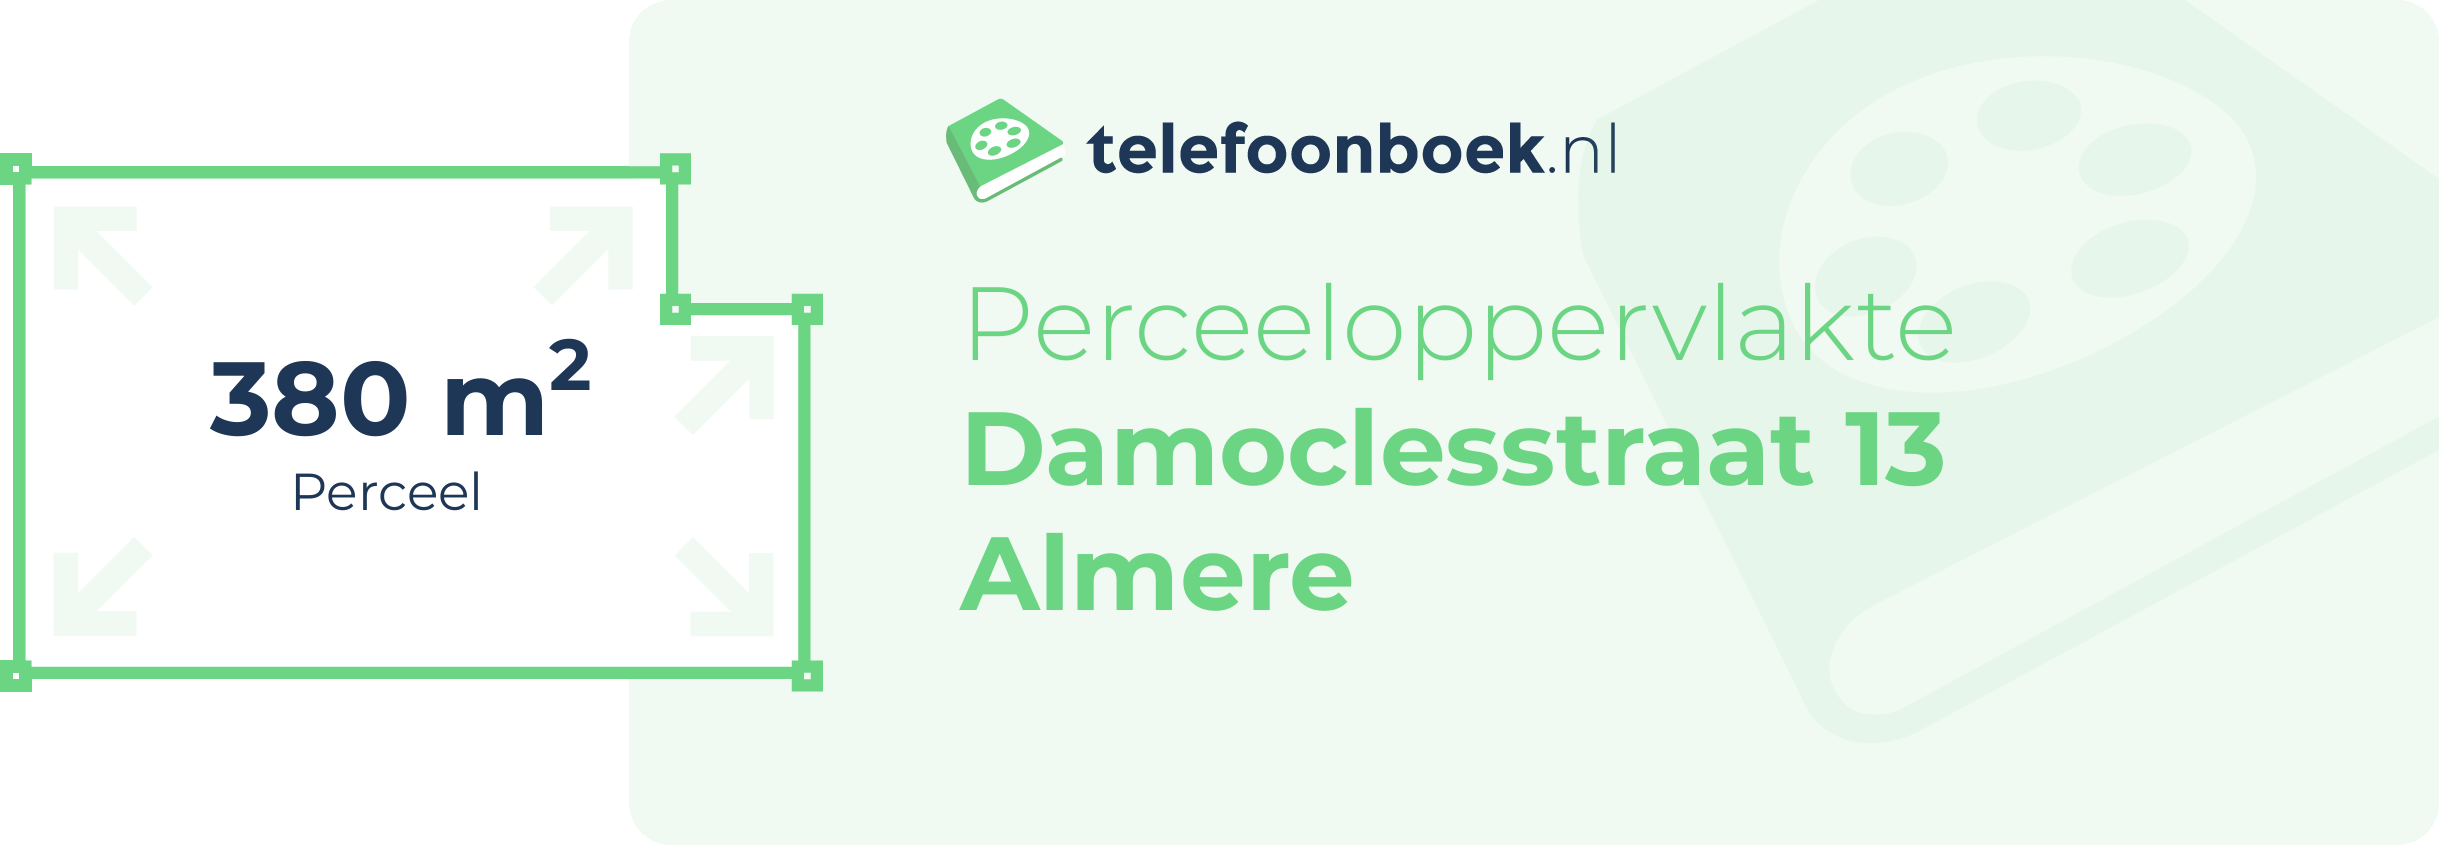 Perceeloppervlakte Damoclesstraat 13 Almere